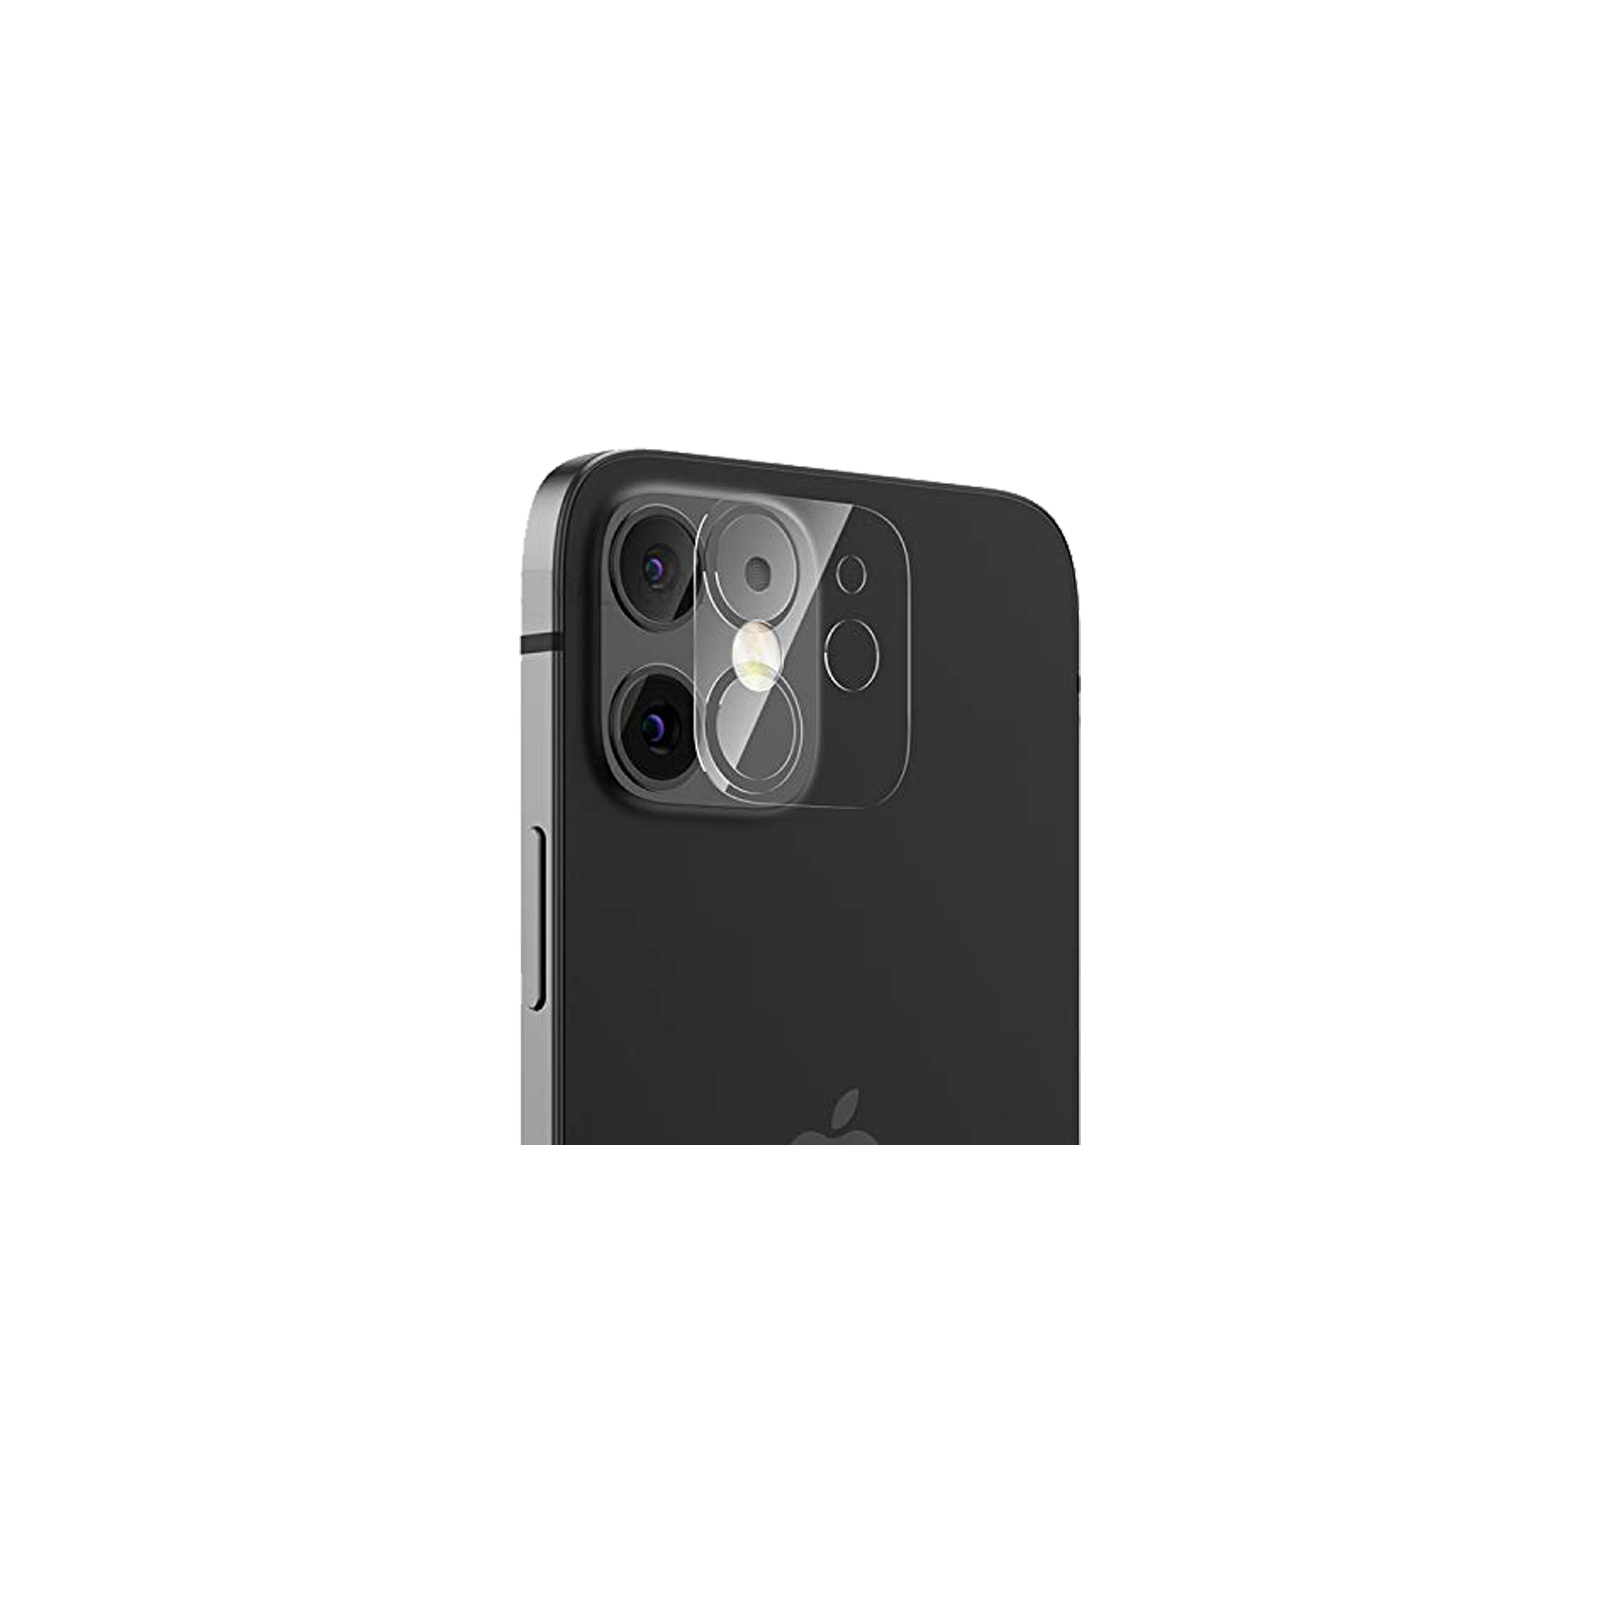 Kinglas iPhone 12 Lens Protector [Brand New]